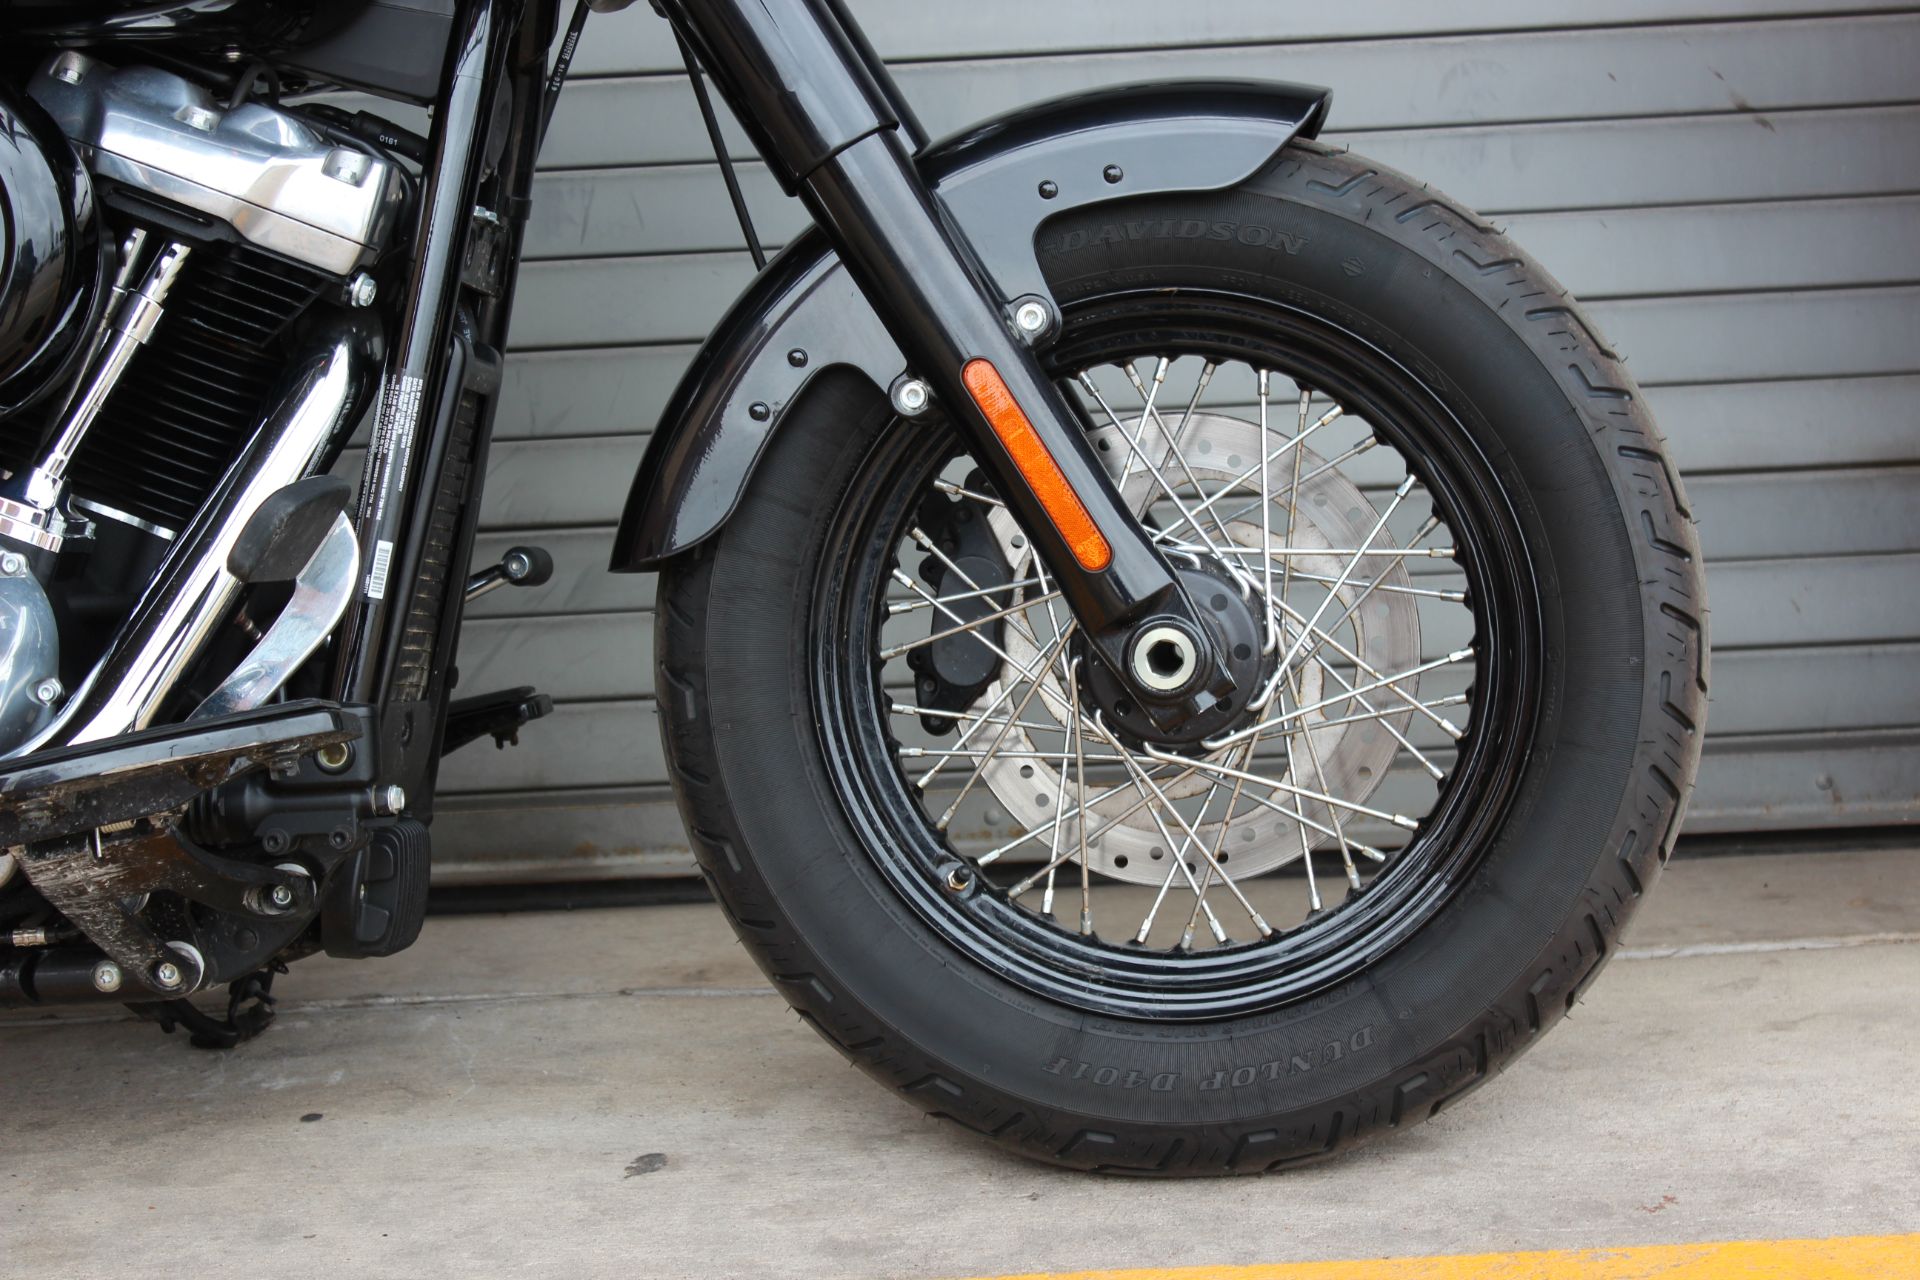 2019 Harley-Davidson Softail Slim® in Carrollton, Texas - Photo 4